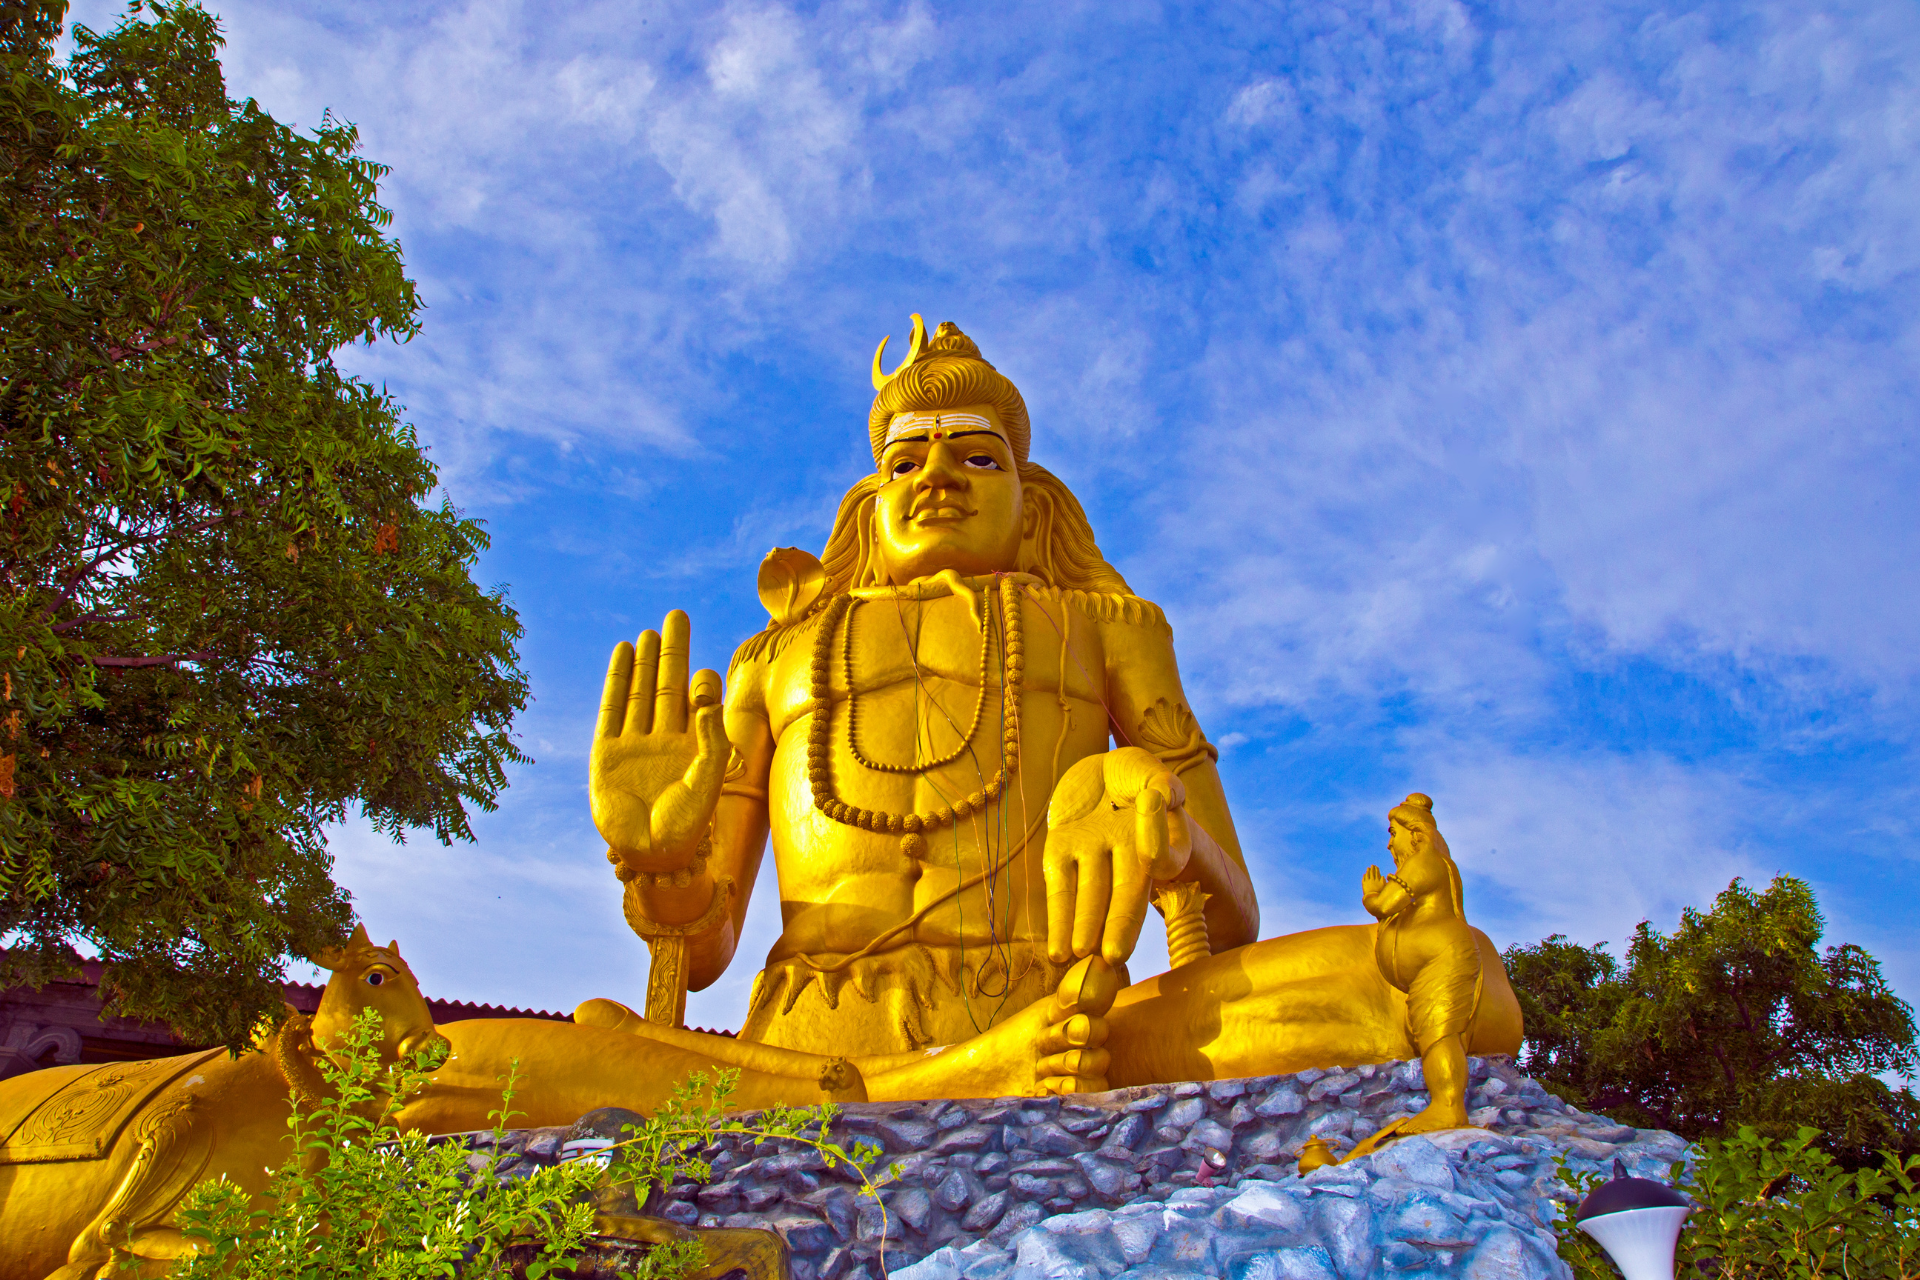 The statue of Shiva in the Koneswaram Temple in Trincomalee, Sri Lanka